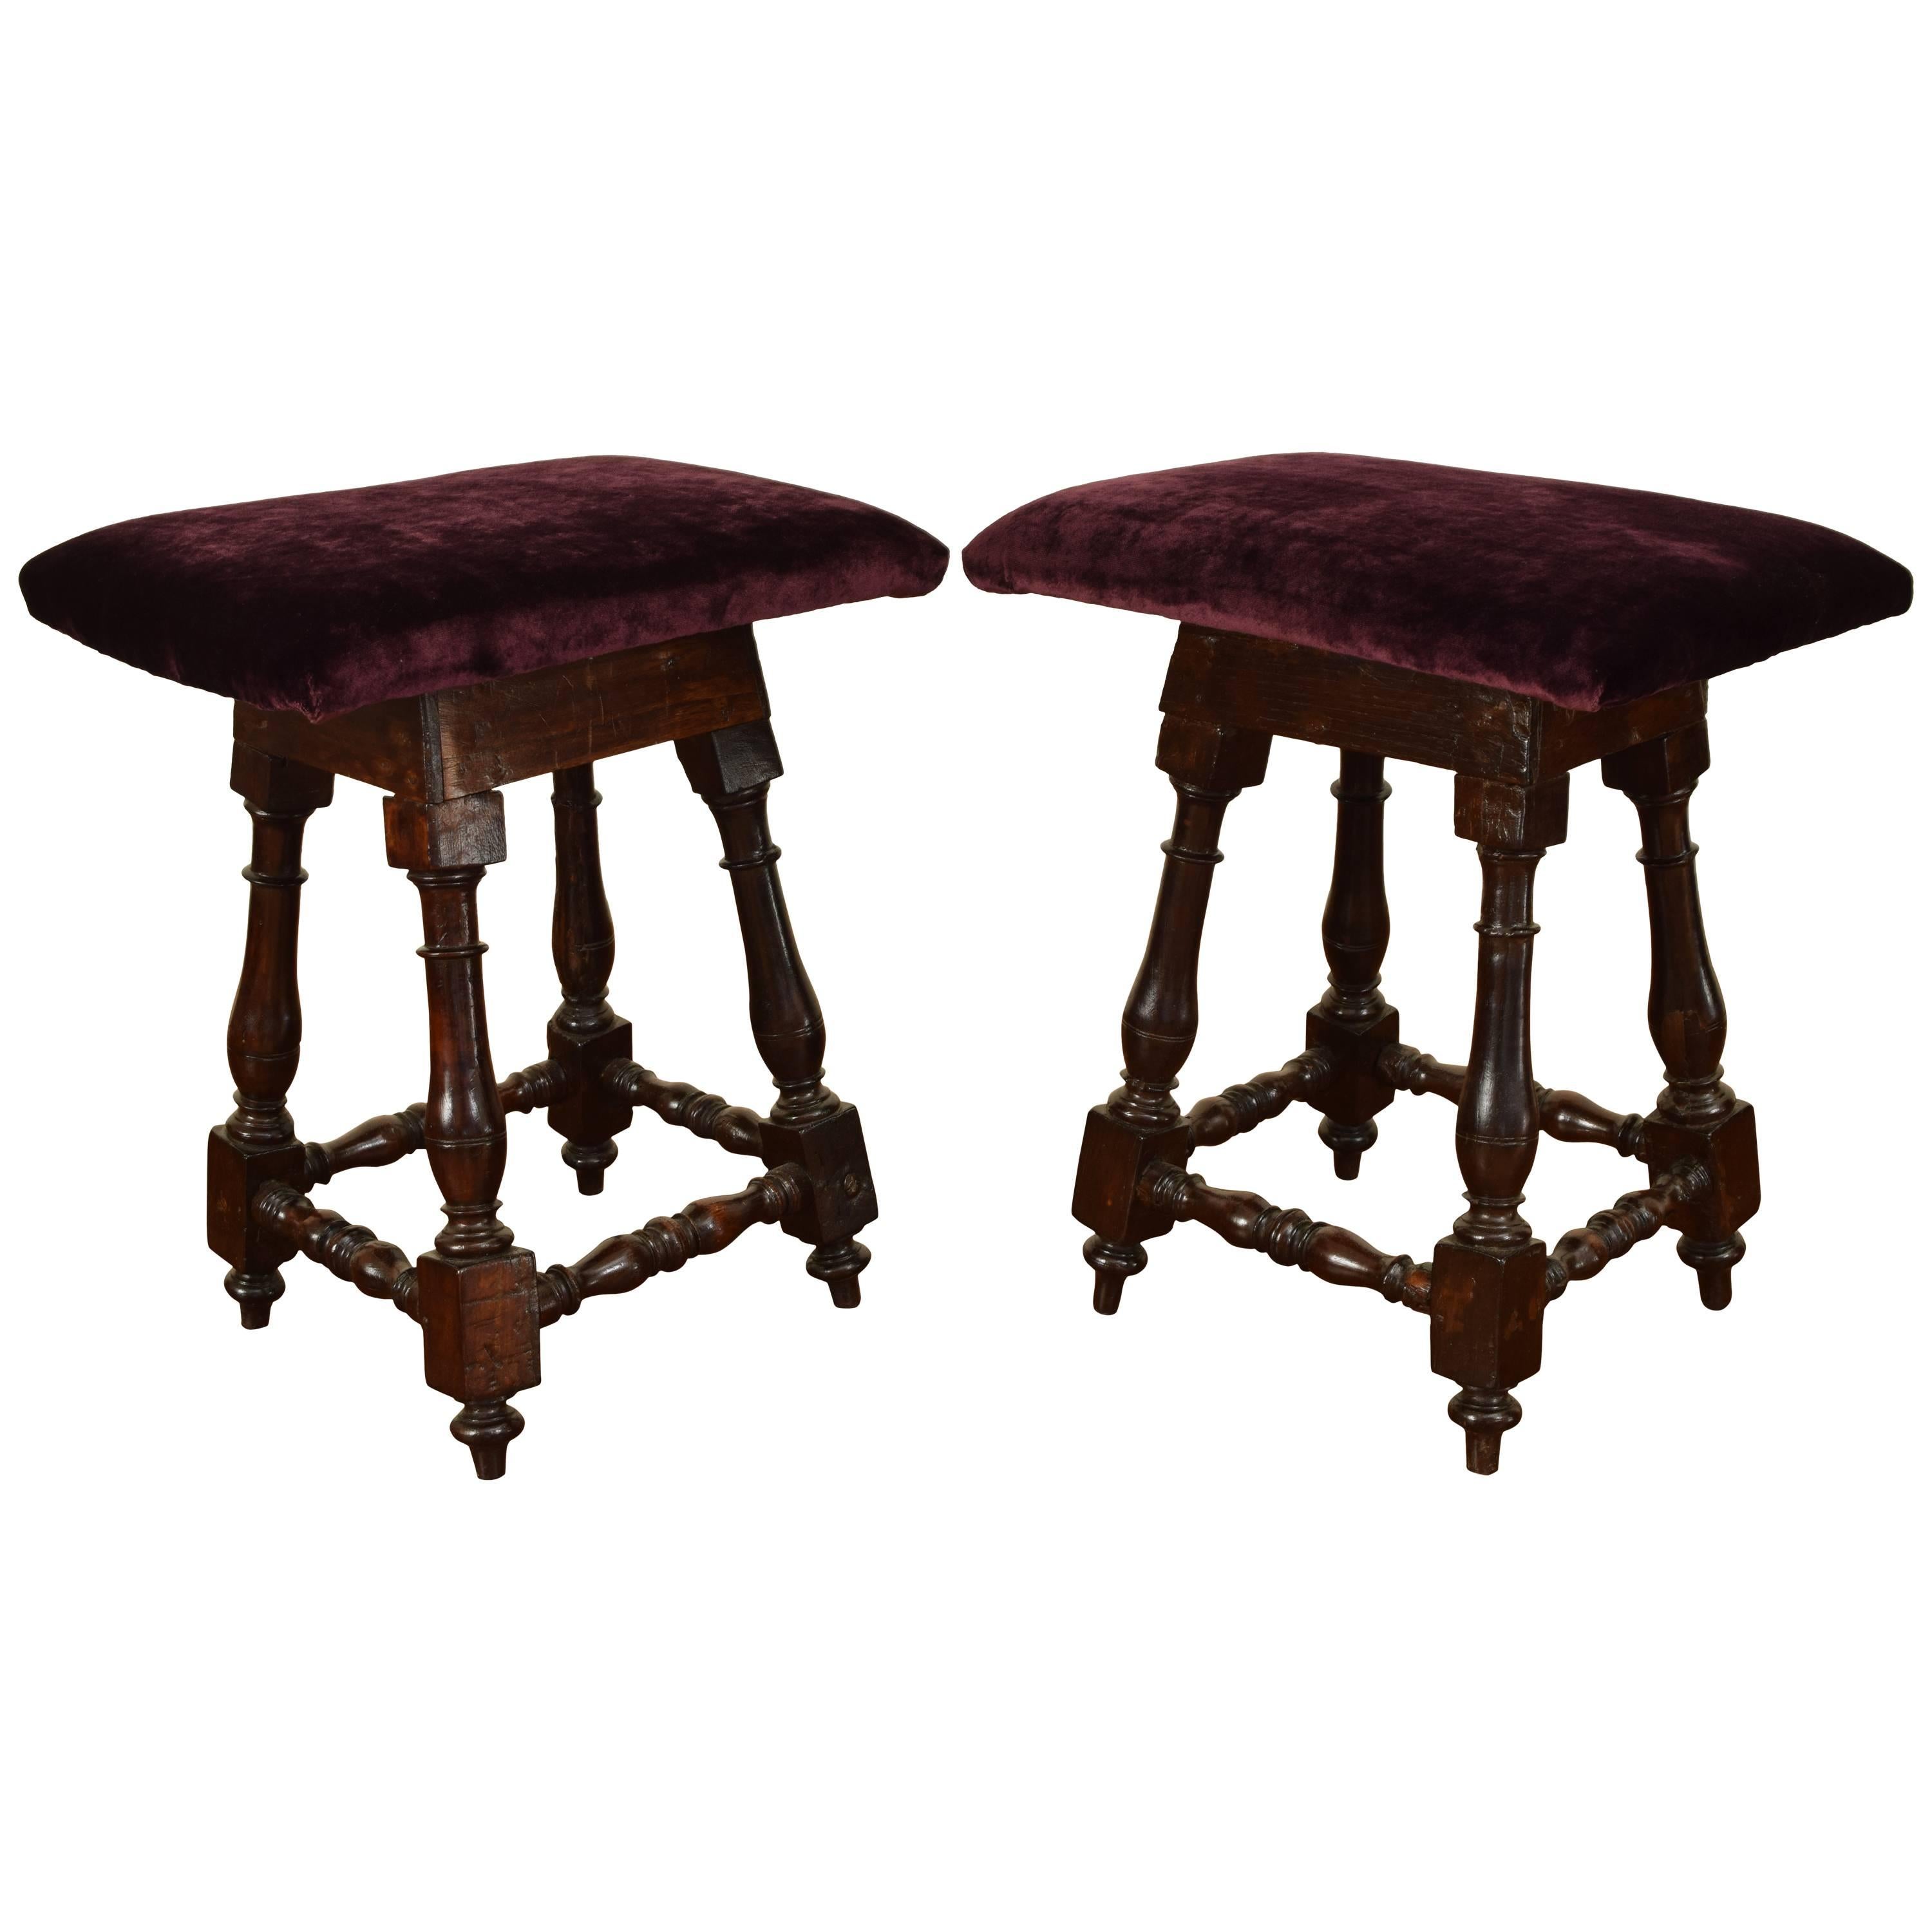 Pair of Italian Early 18th Century Dark Walnut and Upholstered Footstools